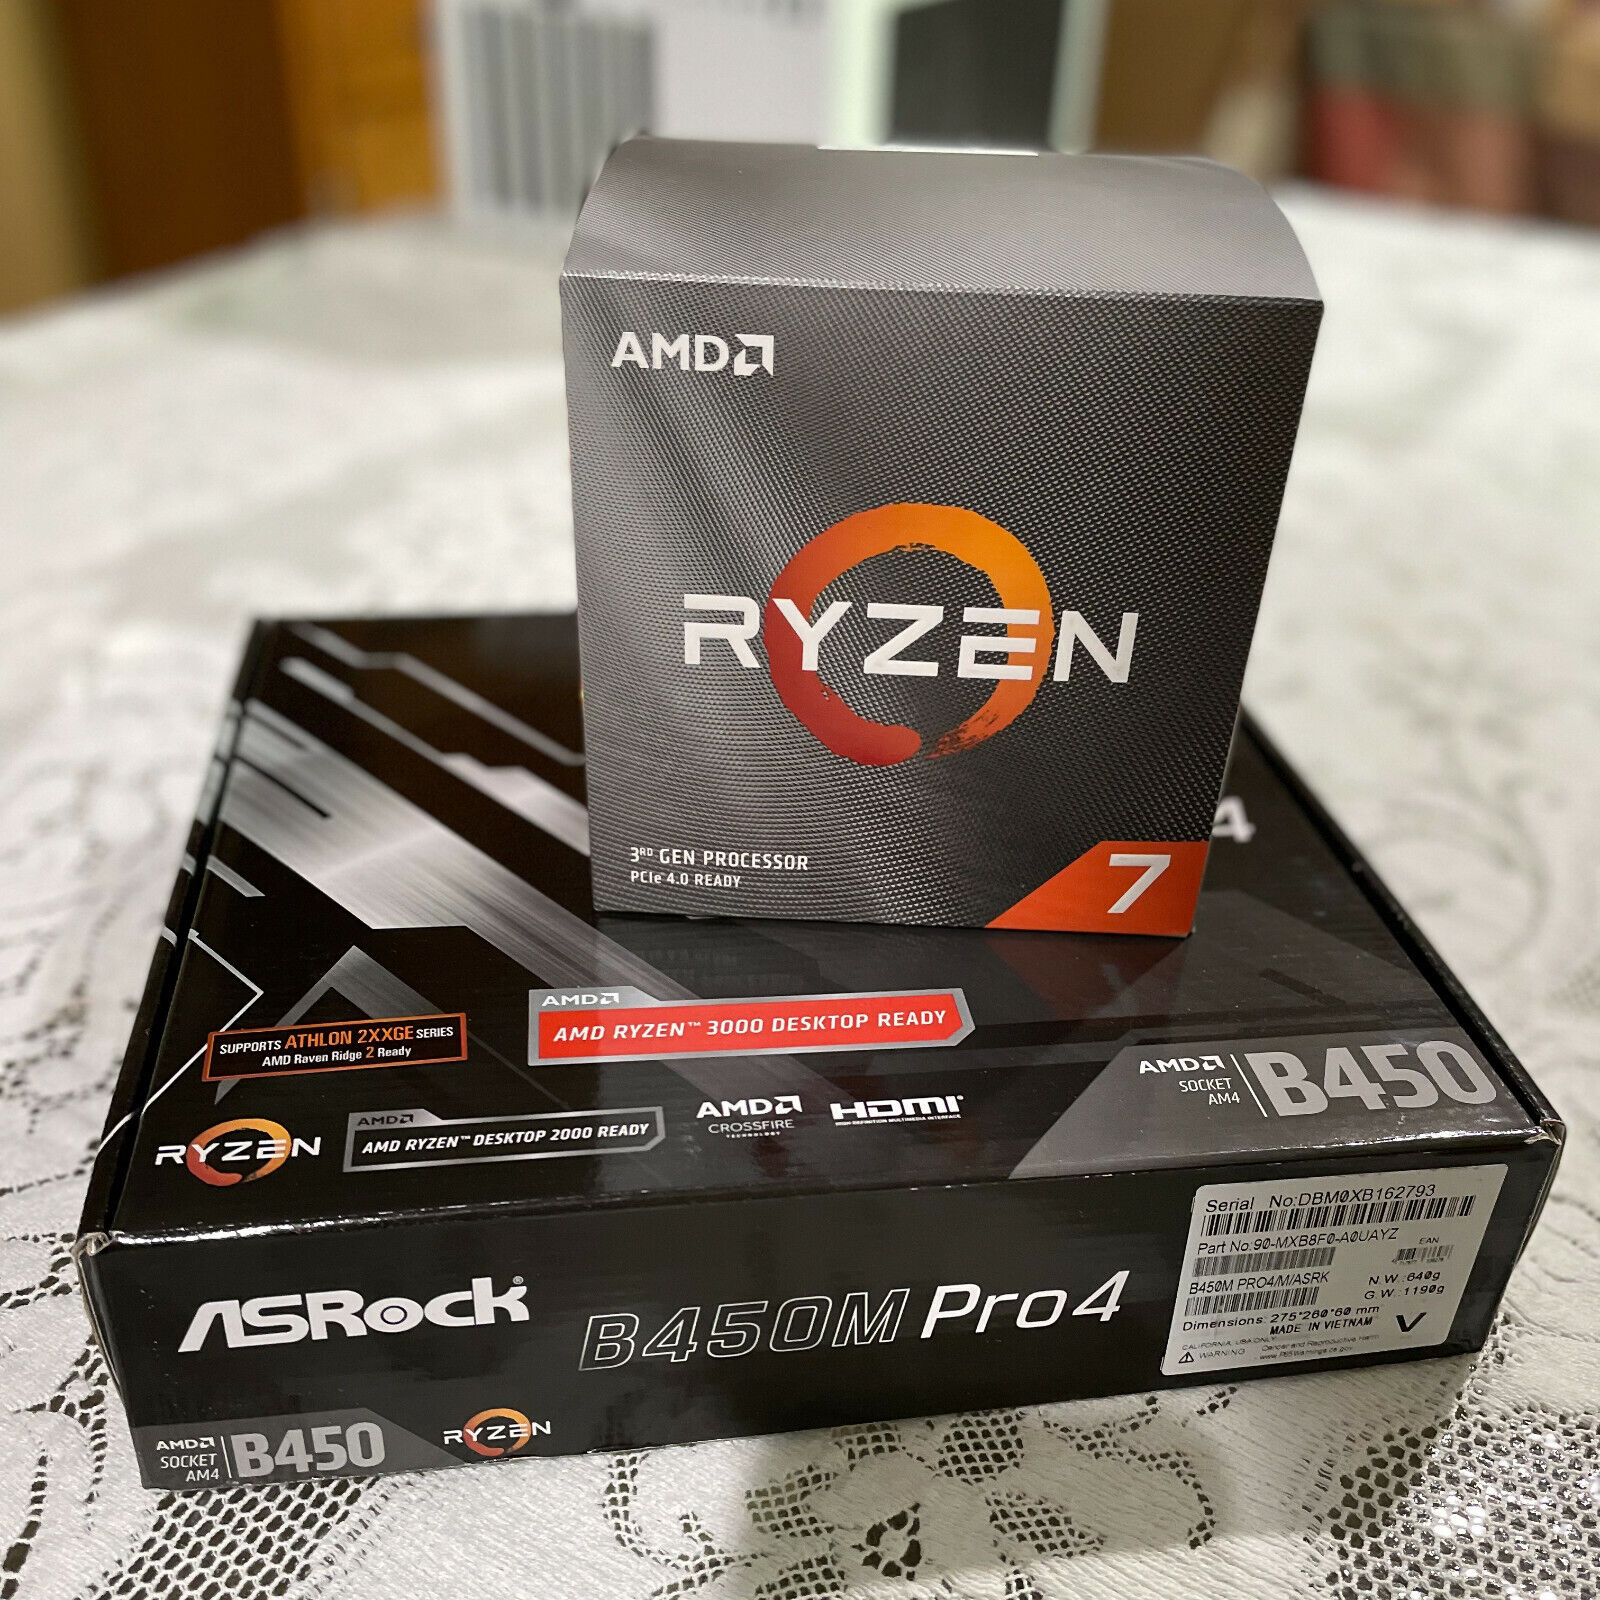 AMD Ryzen 7 3800x CPU & ASRock B450M Pro4 mATX Combo | Still Under OEM Warranty